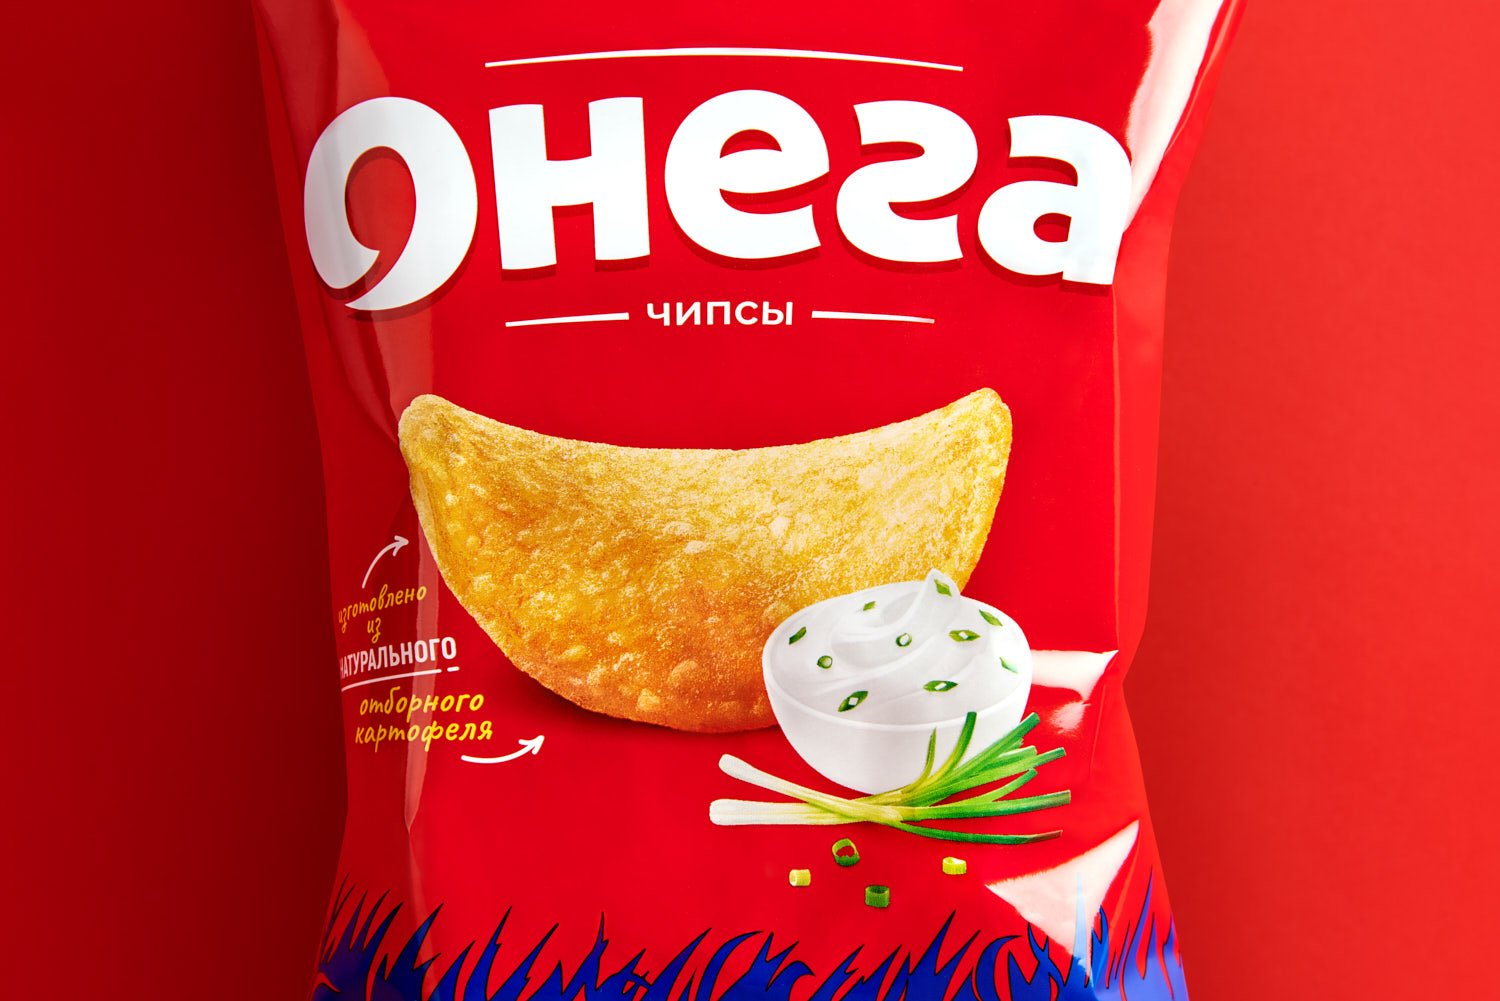 Онега ремонт. Онега чипсы. Онега логотип. Онега упаковка. Белорусские чипсы Онега.